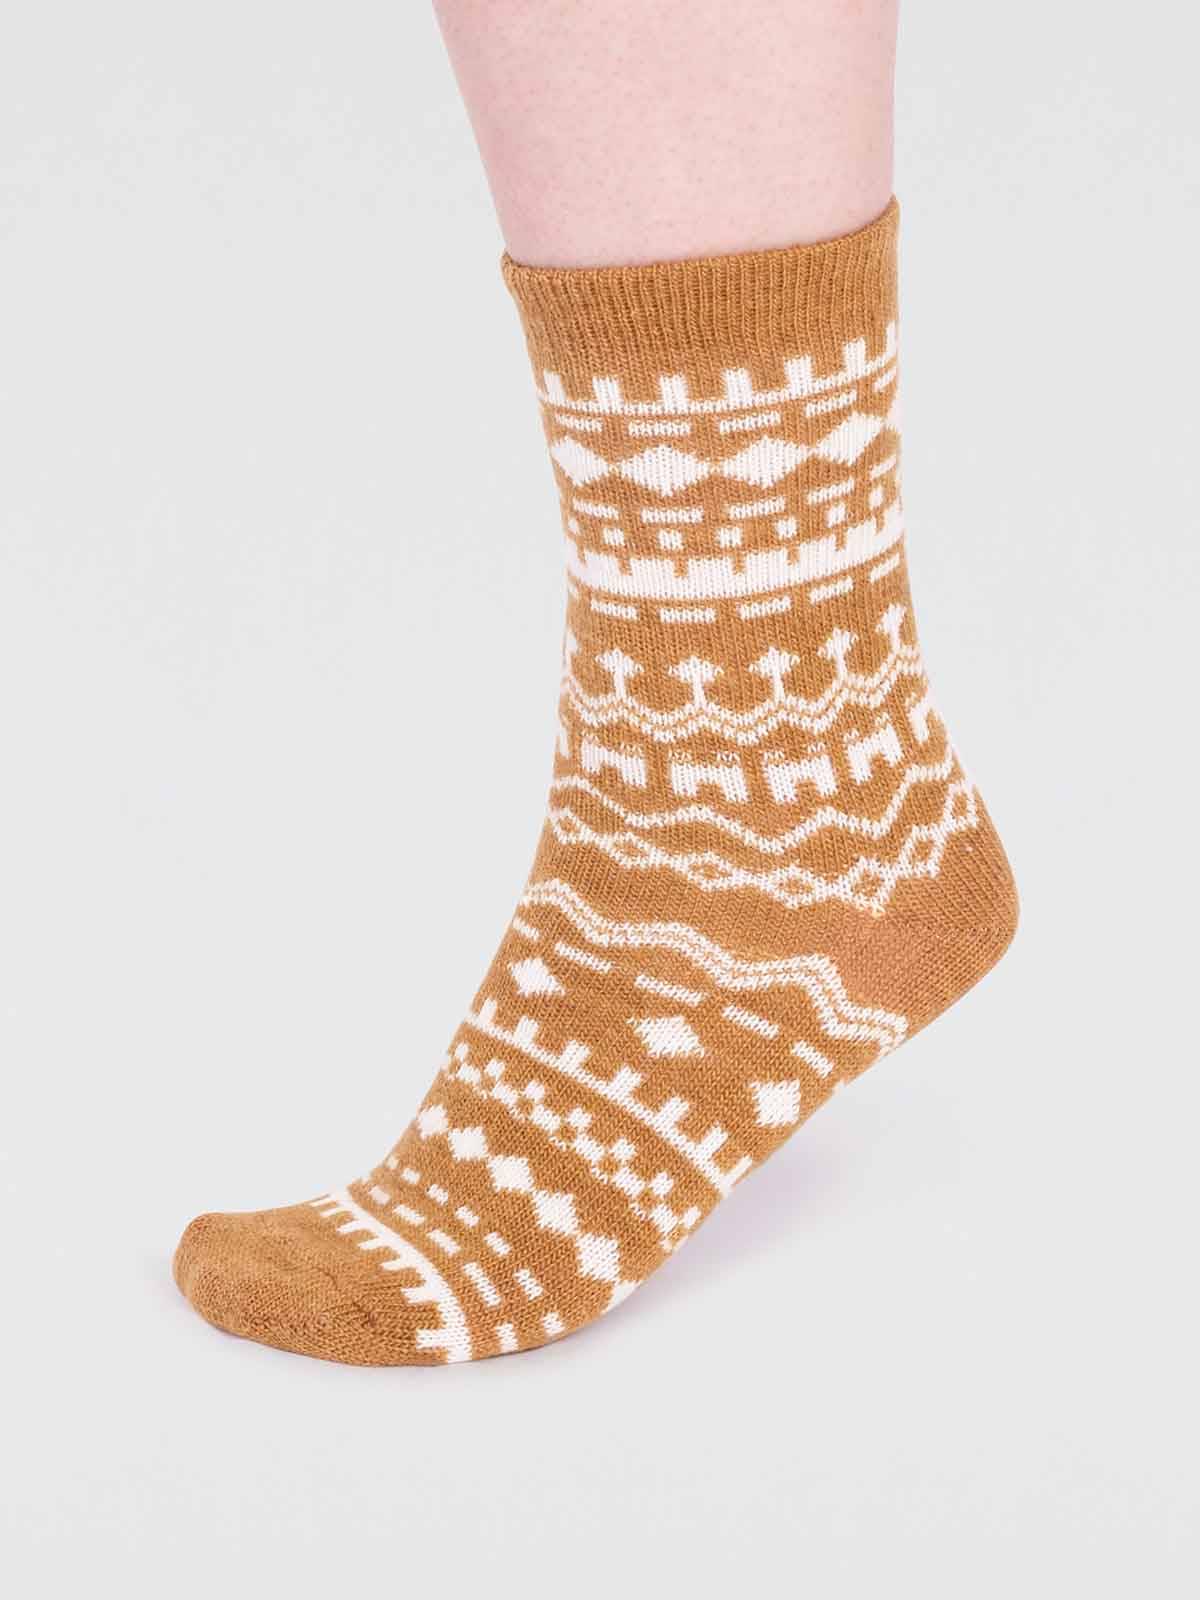 Socken Modell: Archa Wool von Thought